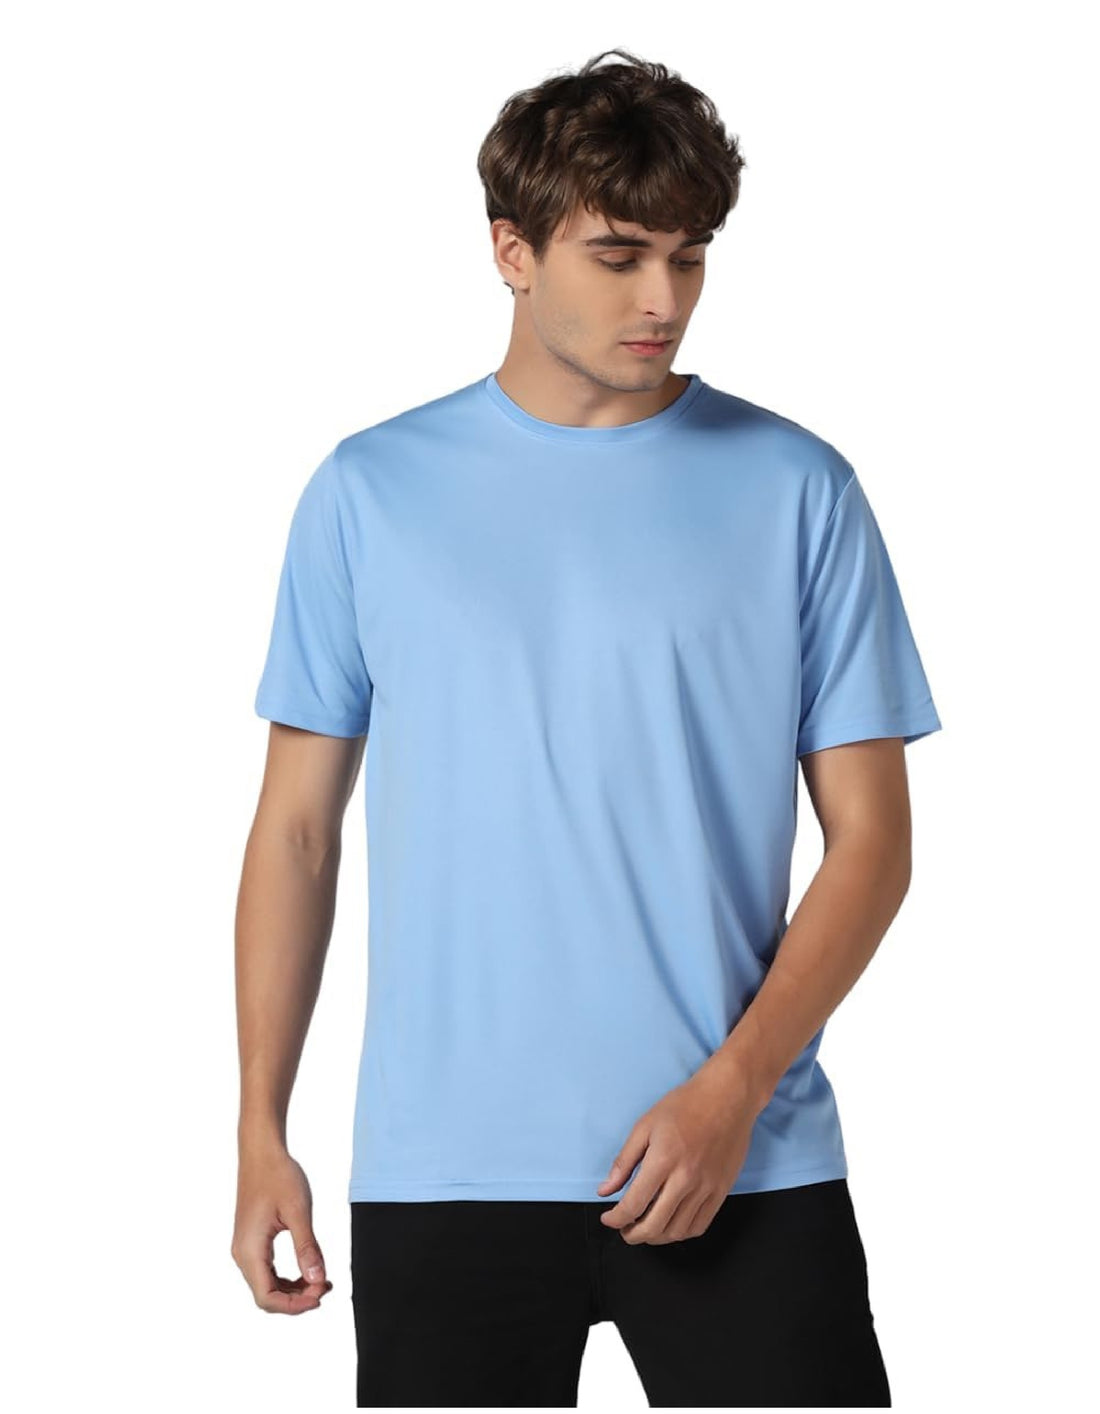 Half Sleeves Plain Polyester T-shirt (Navy Blue)